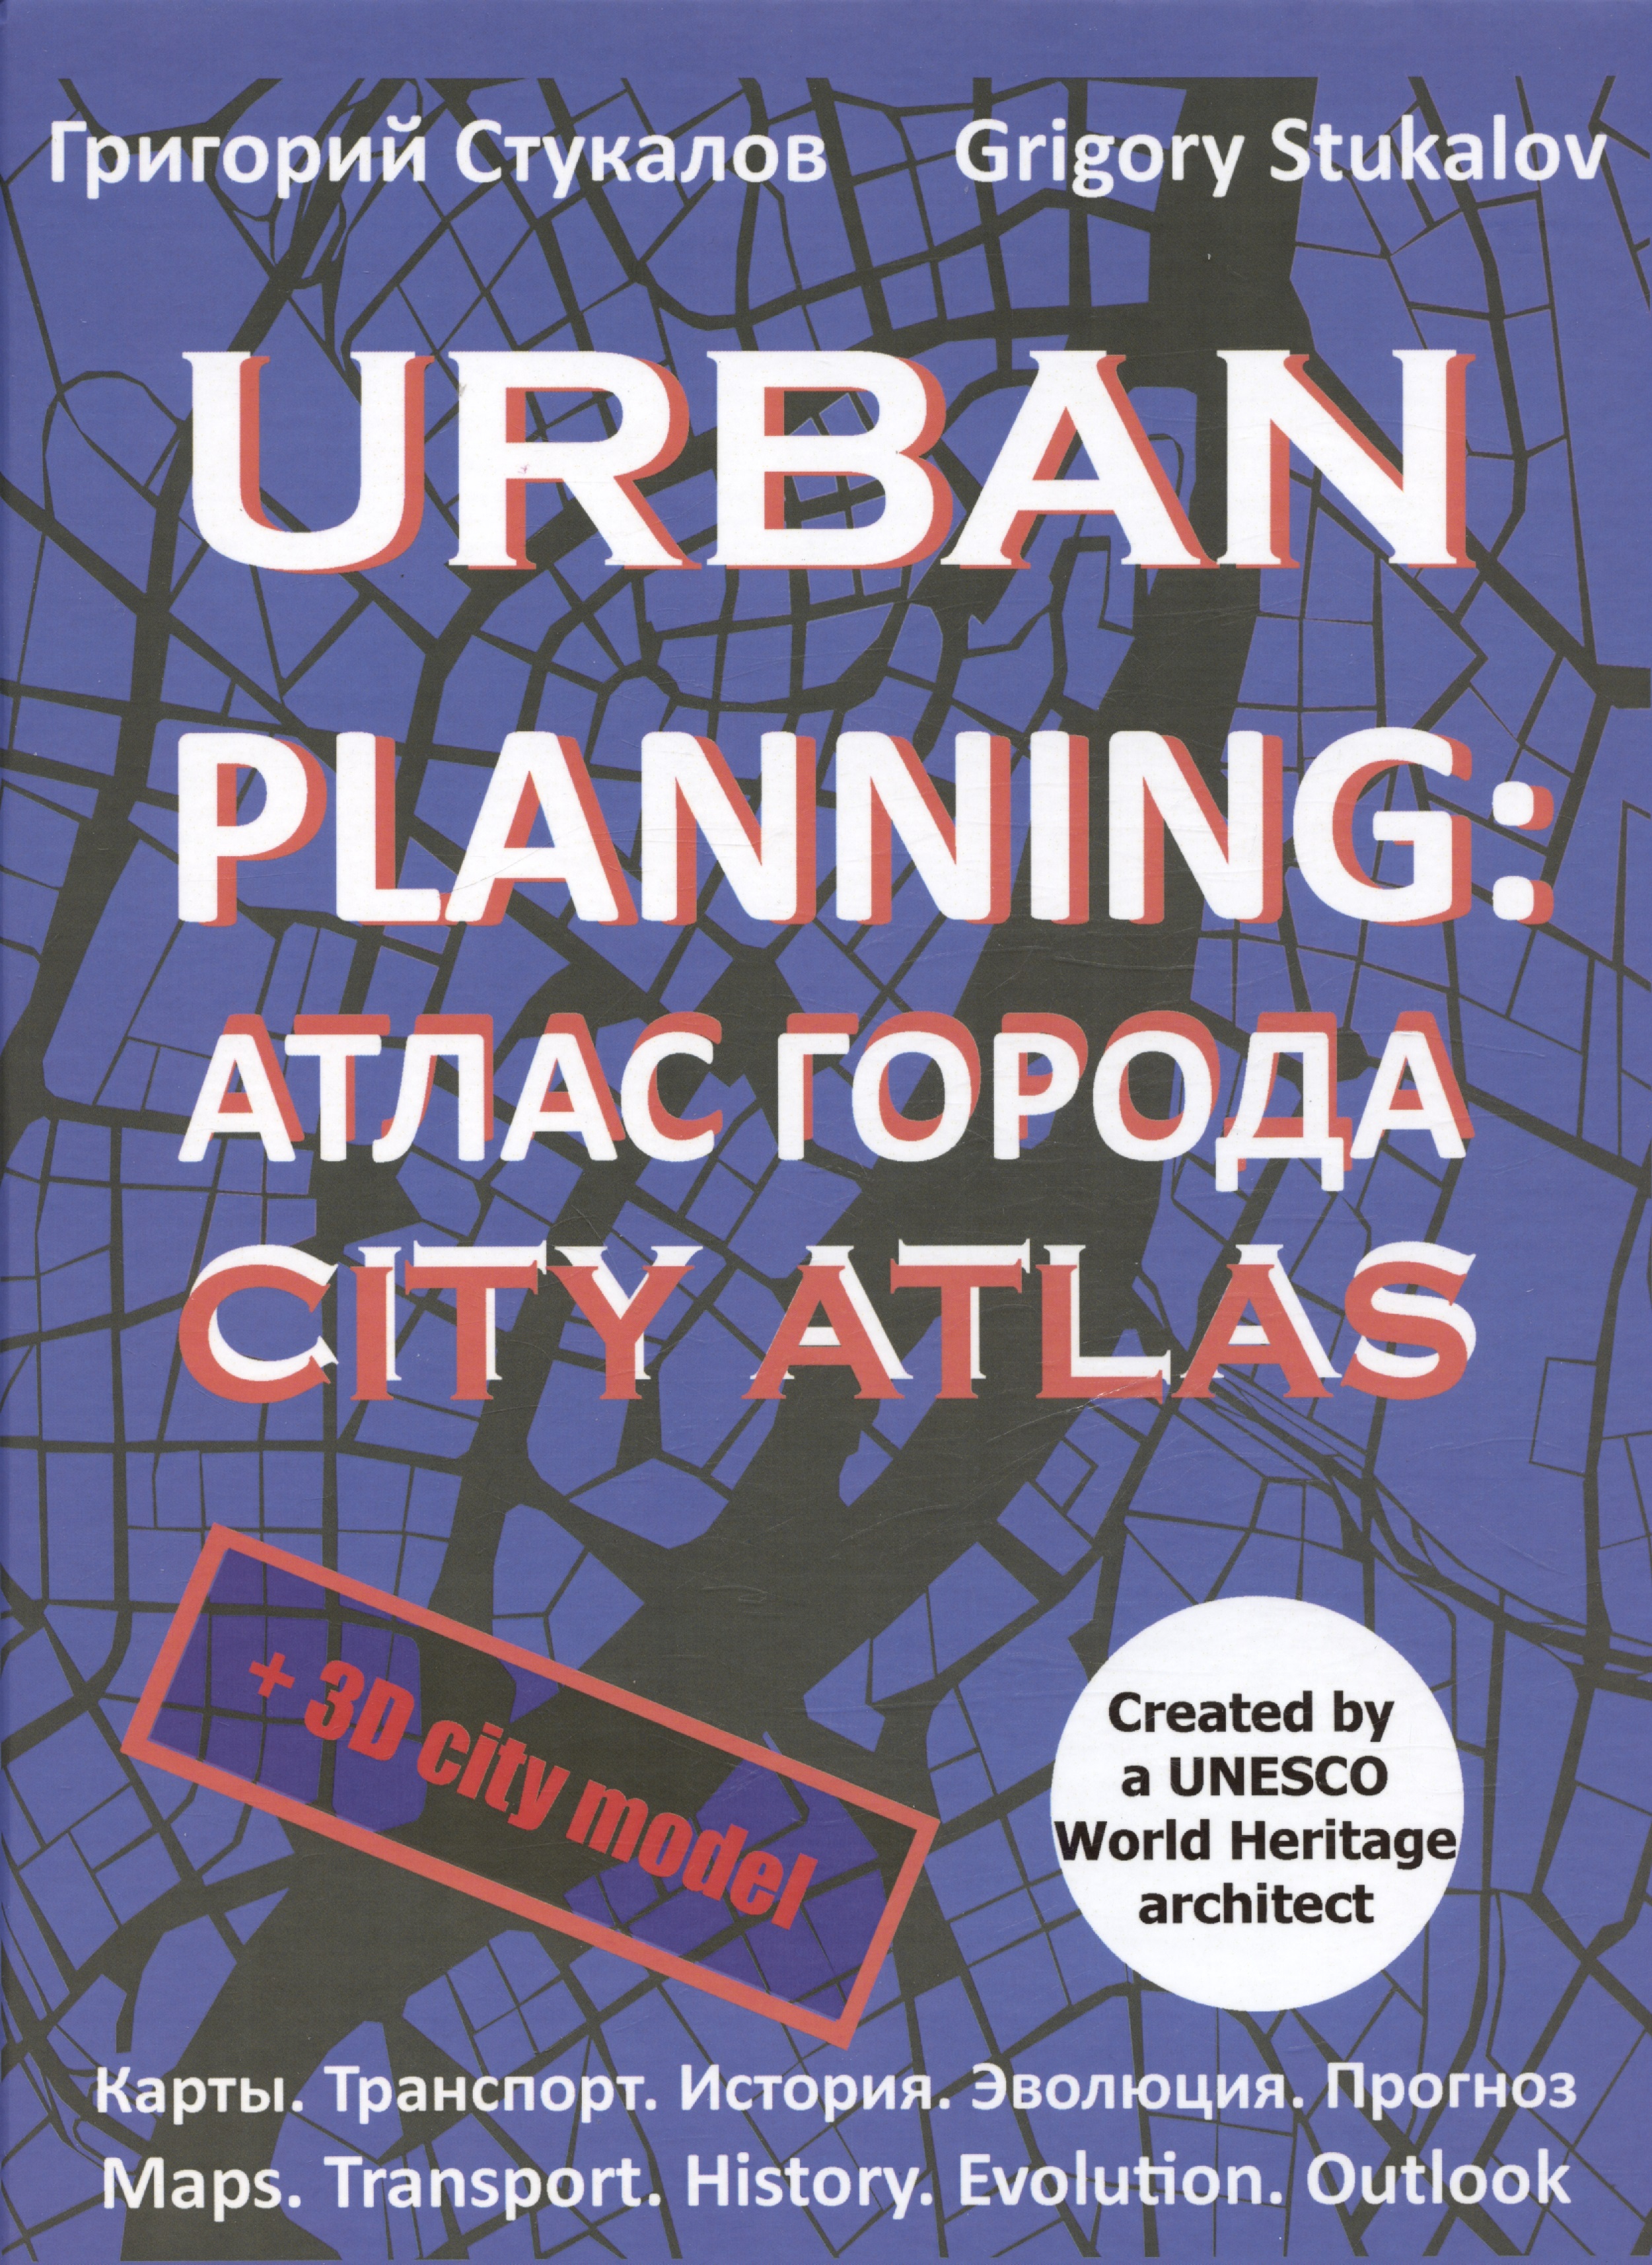 Стукалов Григорий Викторович Urban planning. Атлас города / Urban planning. City atlas